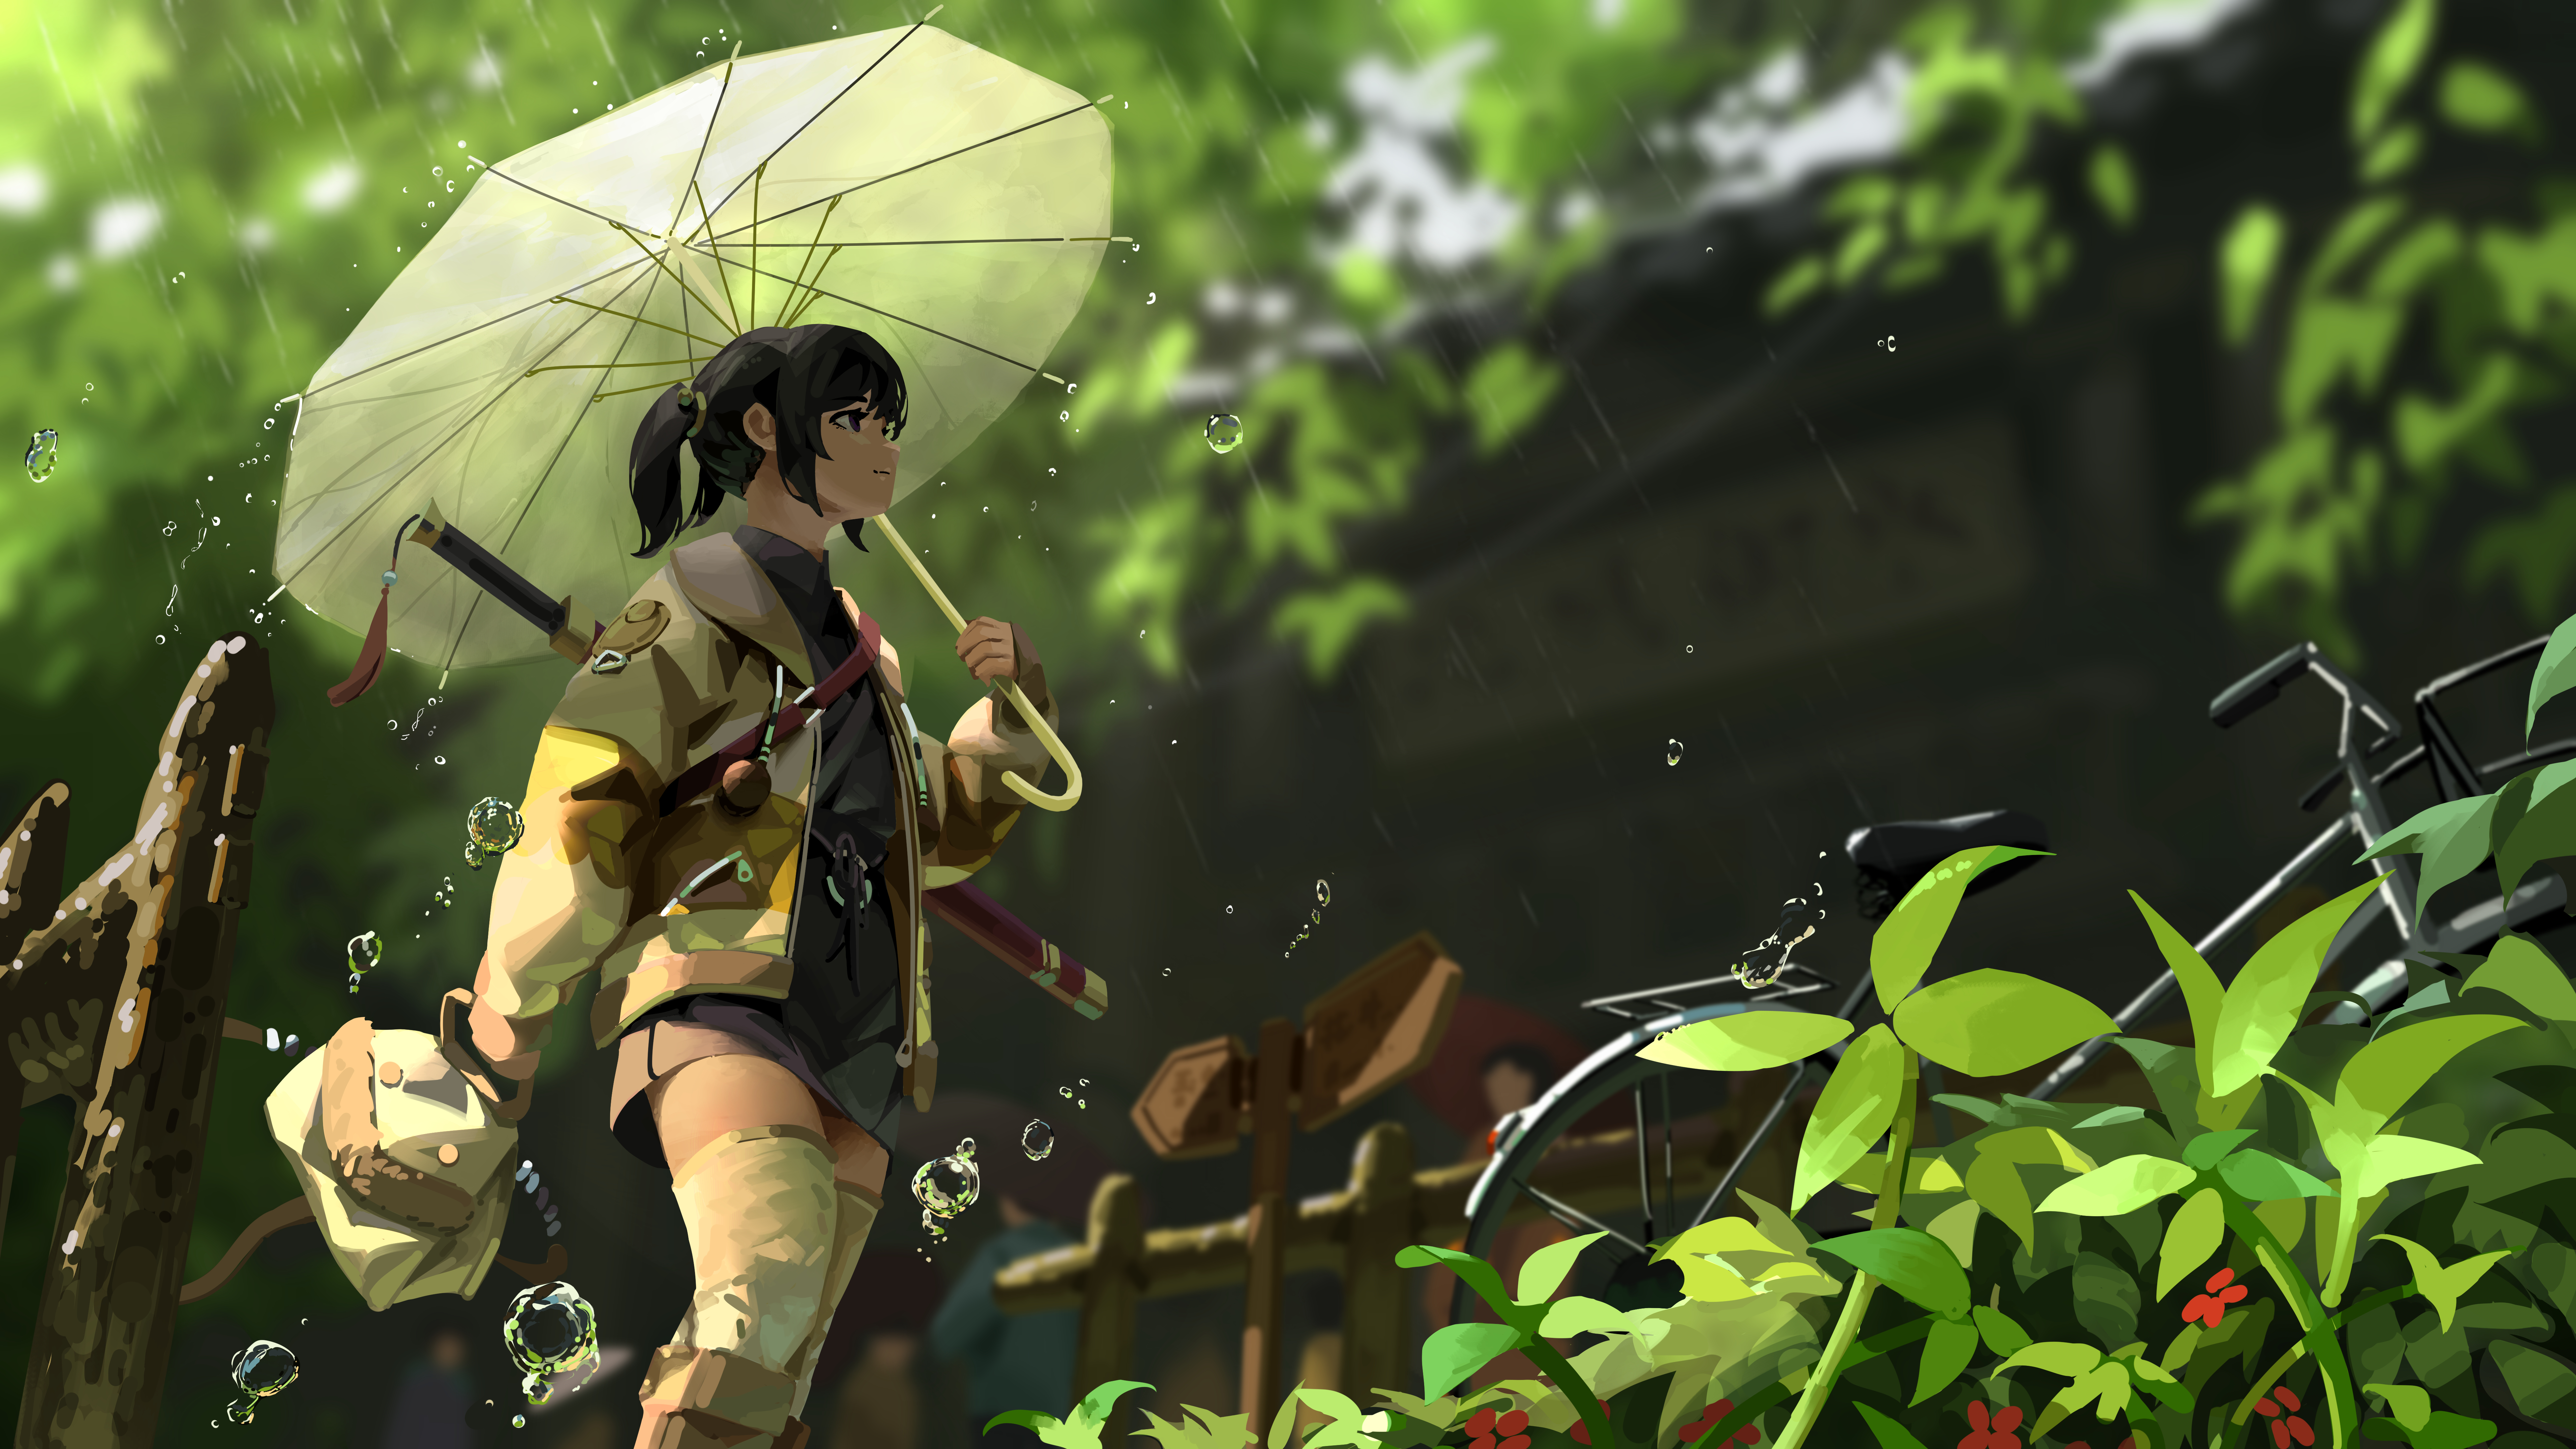 Artwork Rain Umbrella Sword Water Drops Hand Bags Green Bicycle Anime Anime Girls Plants 7680x4320